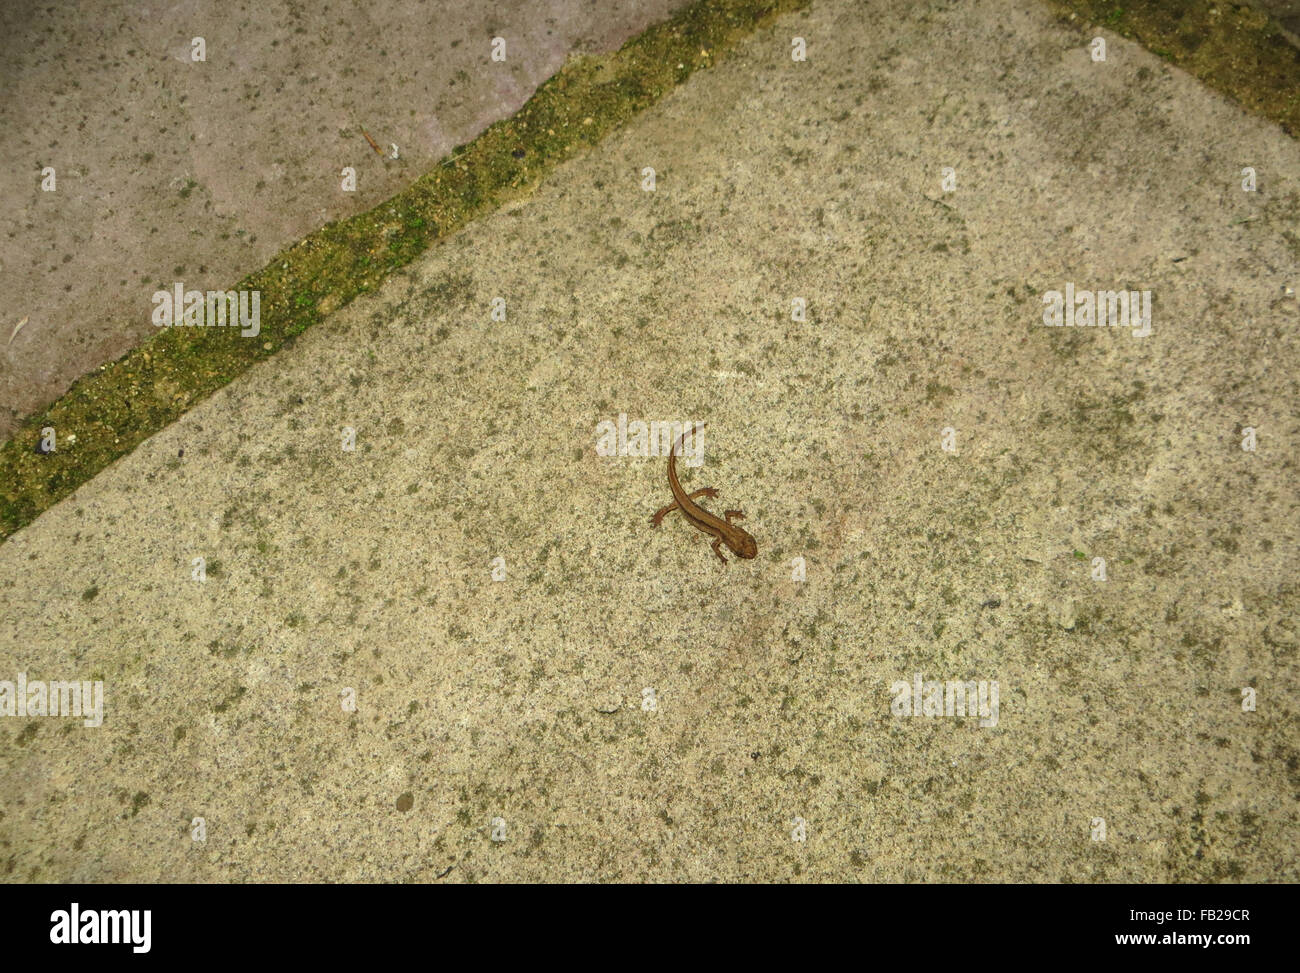 Young smooth newt (Lissotriton vulgaris) on a limestone paving slab Stock Photo